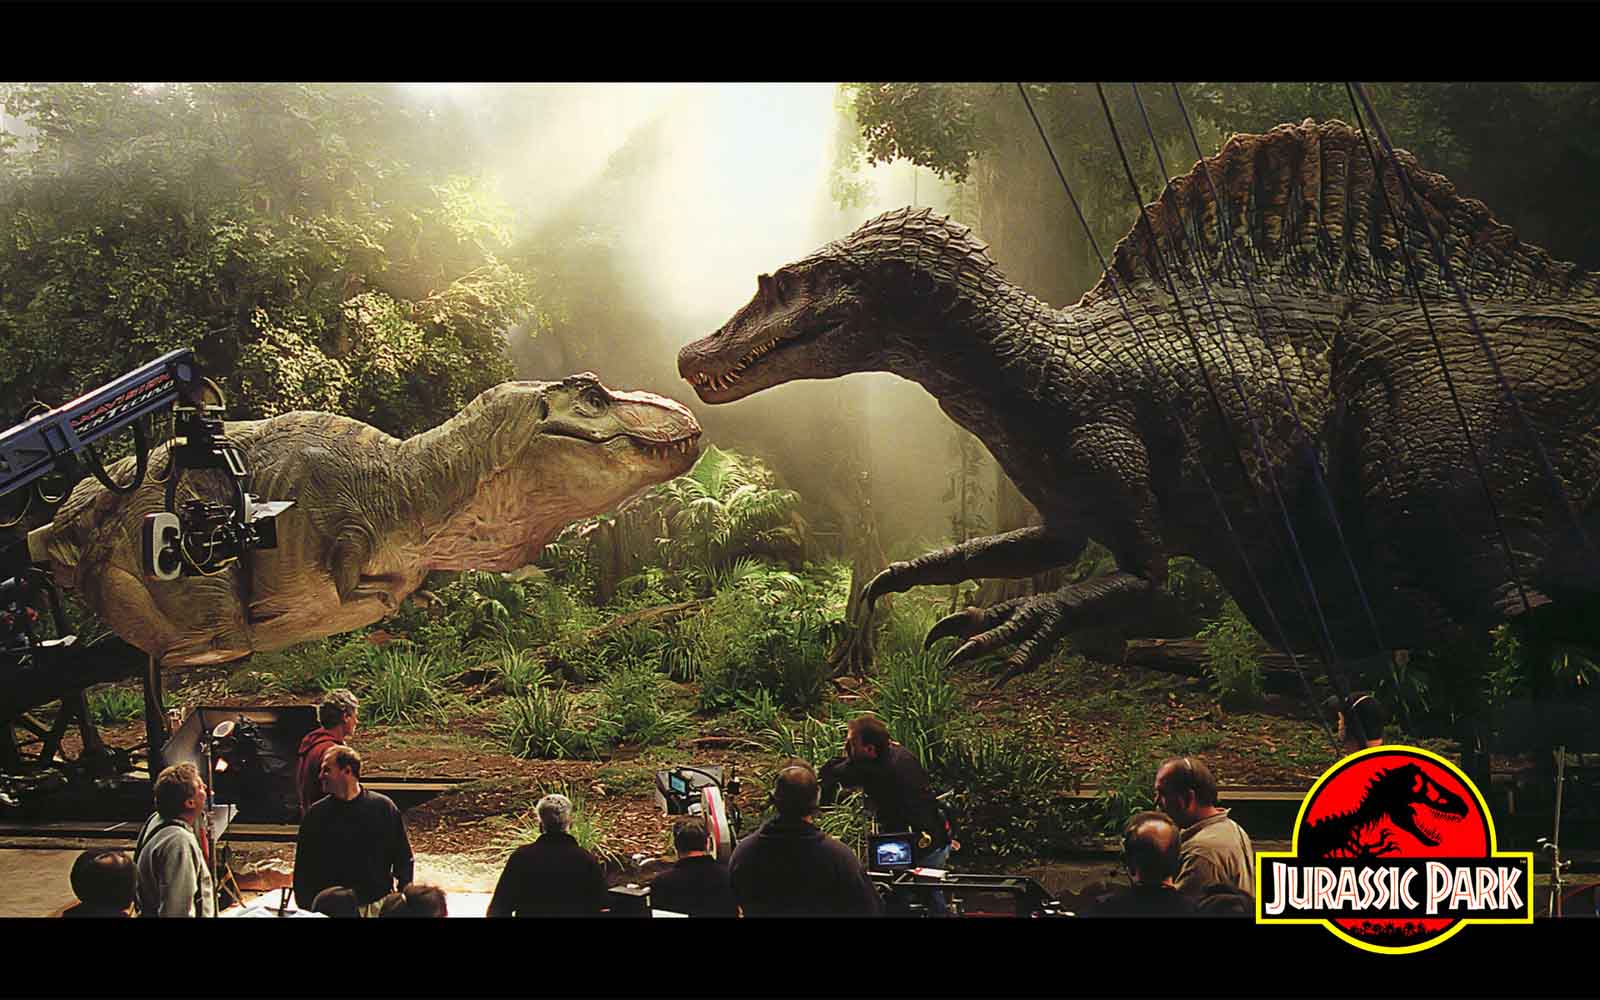 Jurassic Park 4 Latest HD Wallpaper Free Download. Best Image